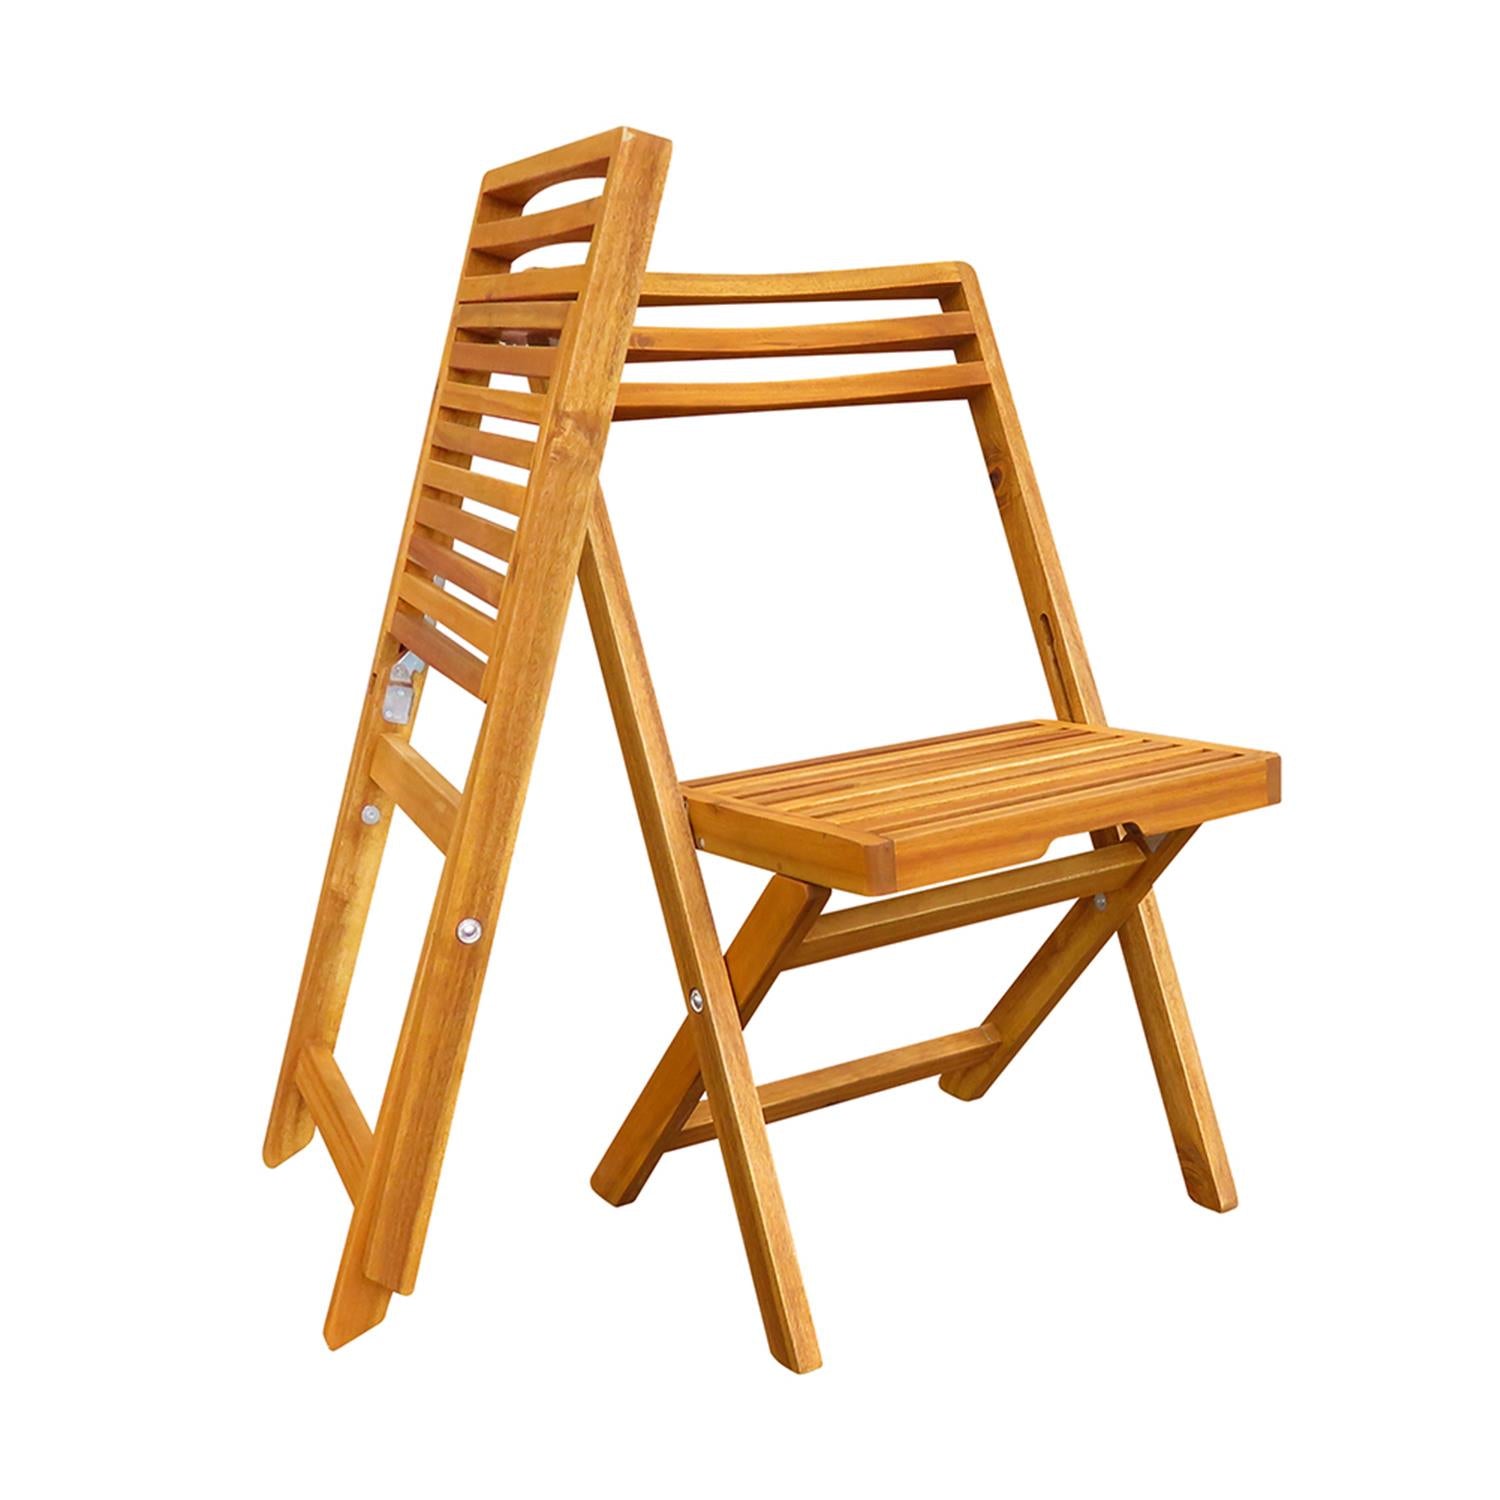 ReHome Interbuild Slat Büyük Sandalye, Akasya, Altın tik (2 adet/paket) 50*50*88.5 cm